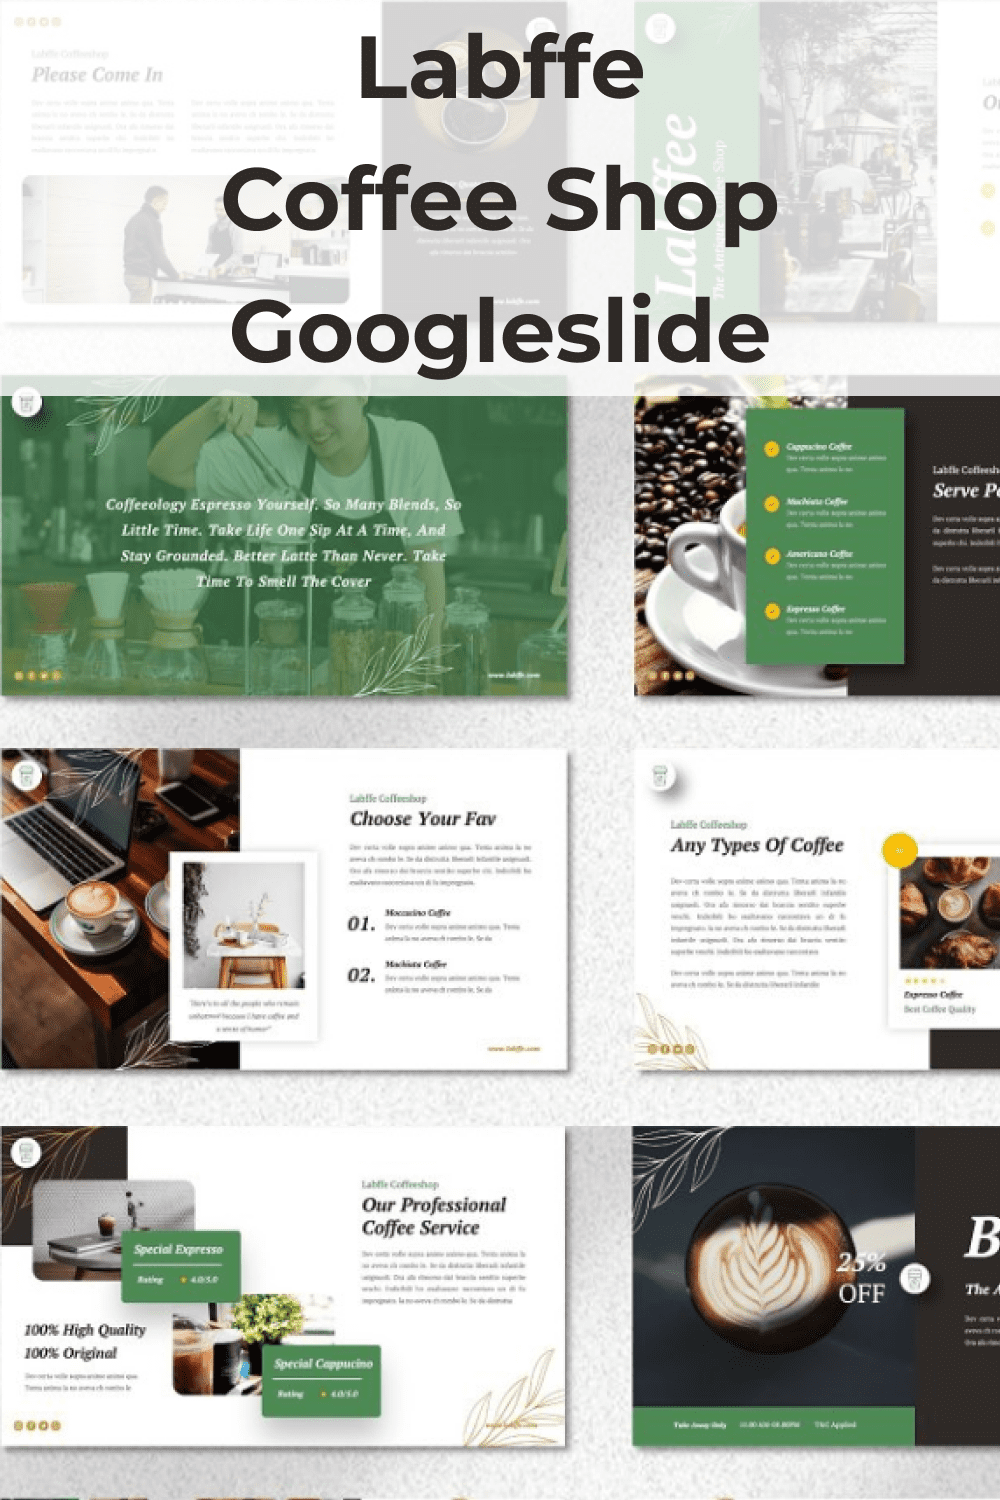 Labffe - Coffee Shop Googleslide Pinterest.